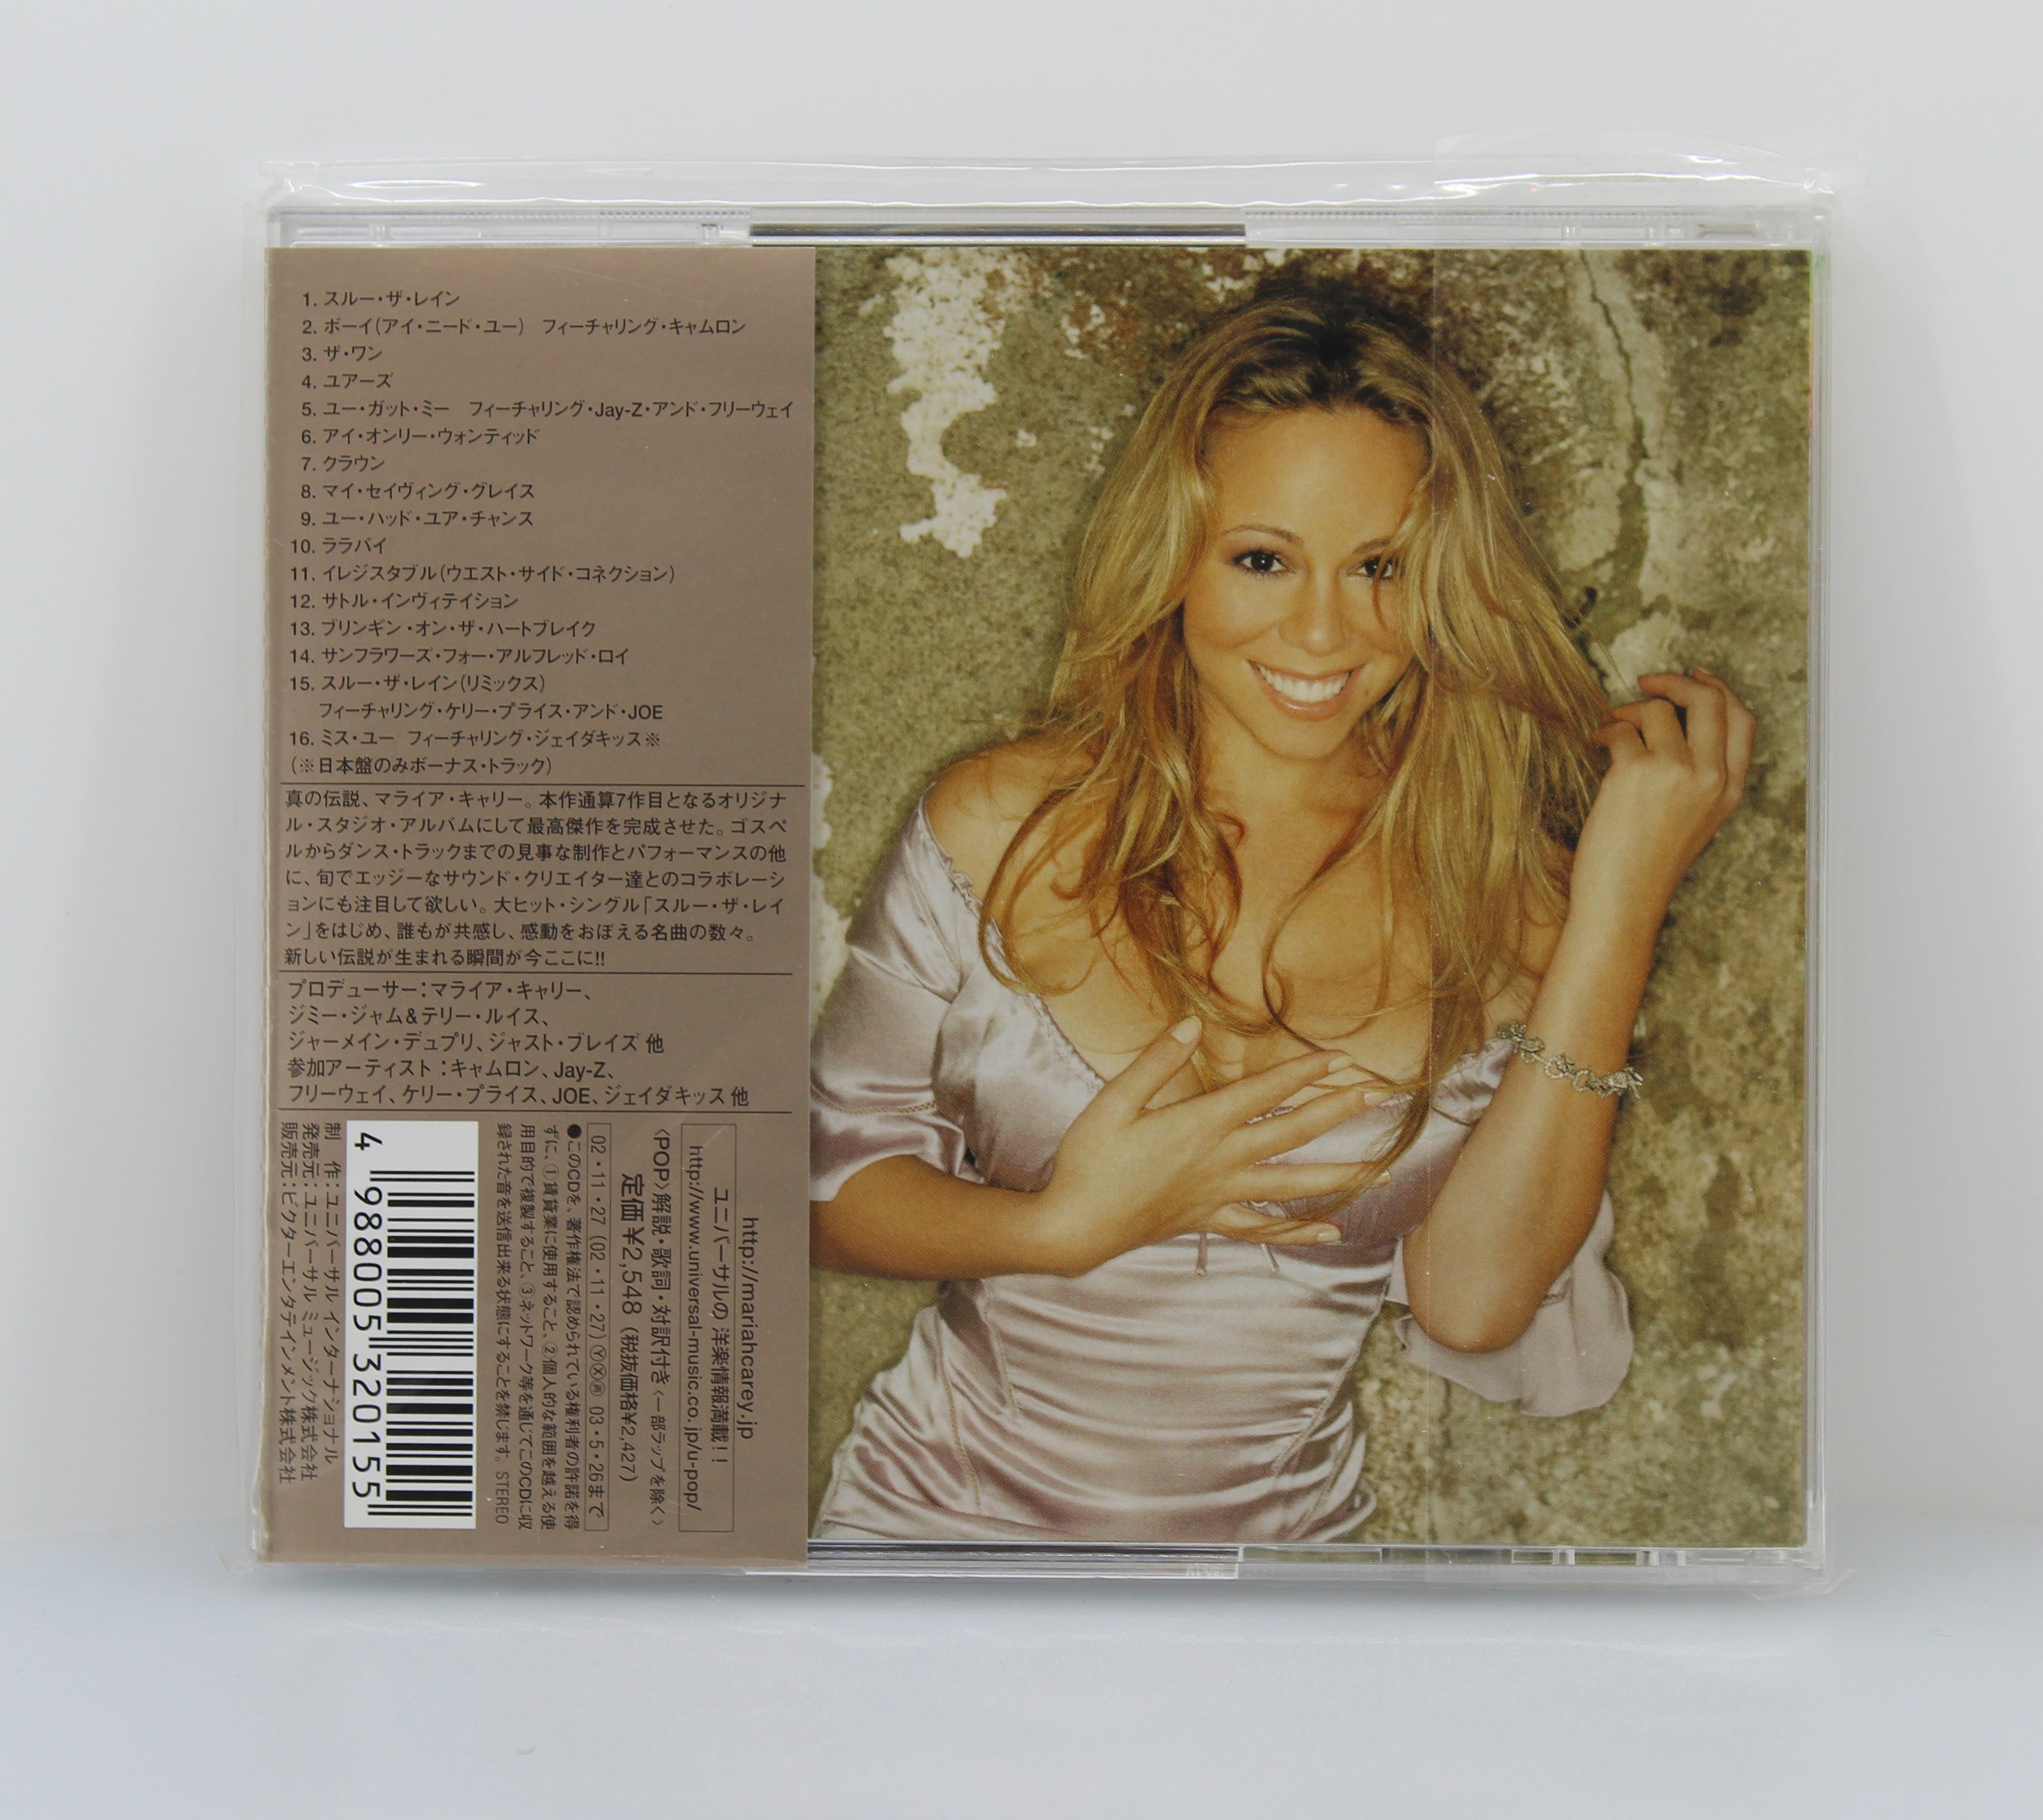 Mariah Carey – Charmbracelet, CD, Album, Japan 2002 - preciousvinyl